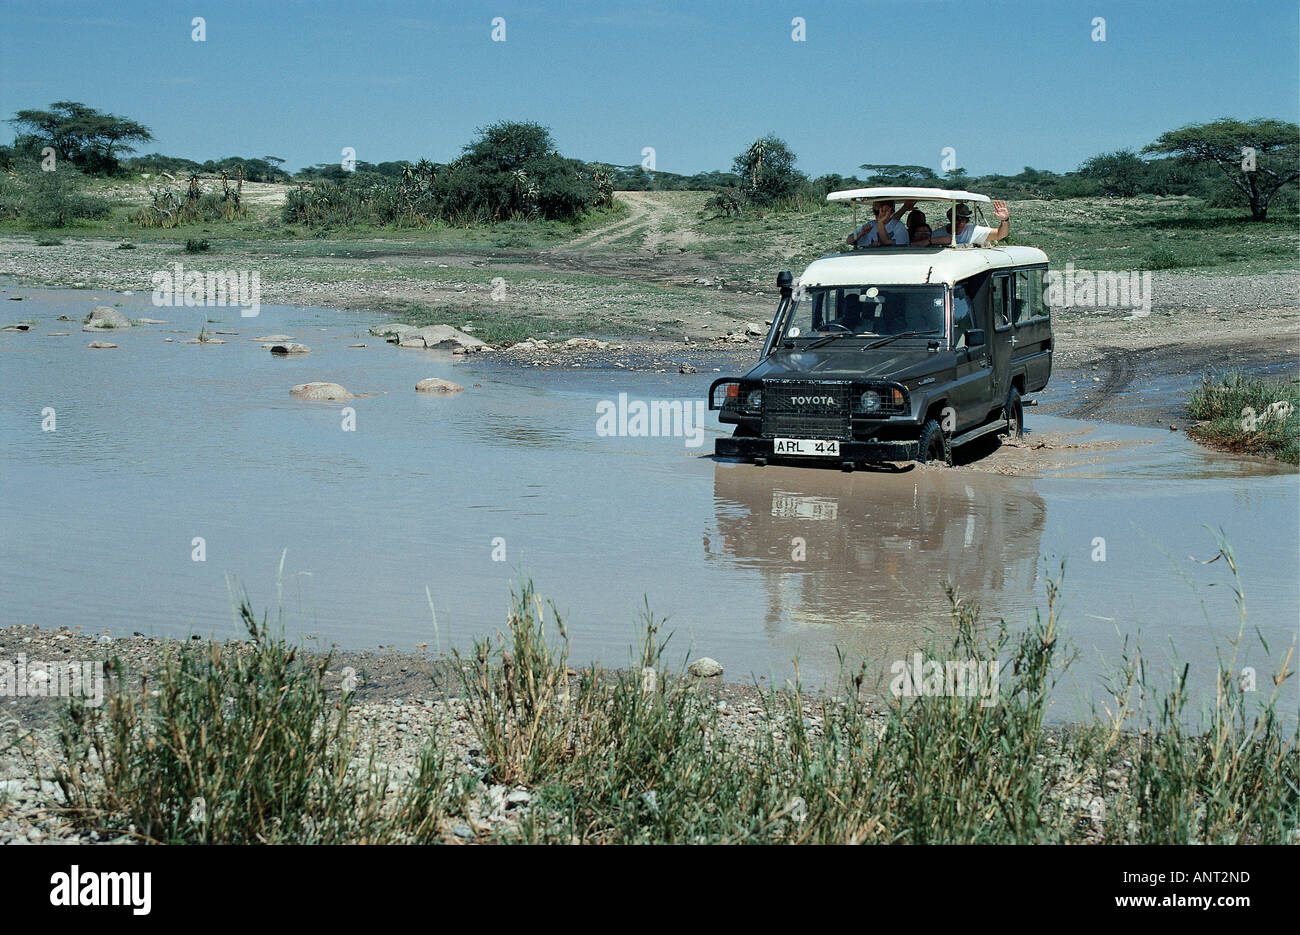 Toyota Landcruiser fording eine saisonale Bach nördlich von Moru Kopjes Serengeti Nationalpark Tansania Ostafrika Stockfoto